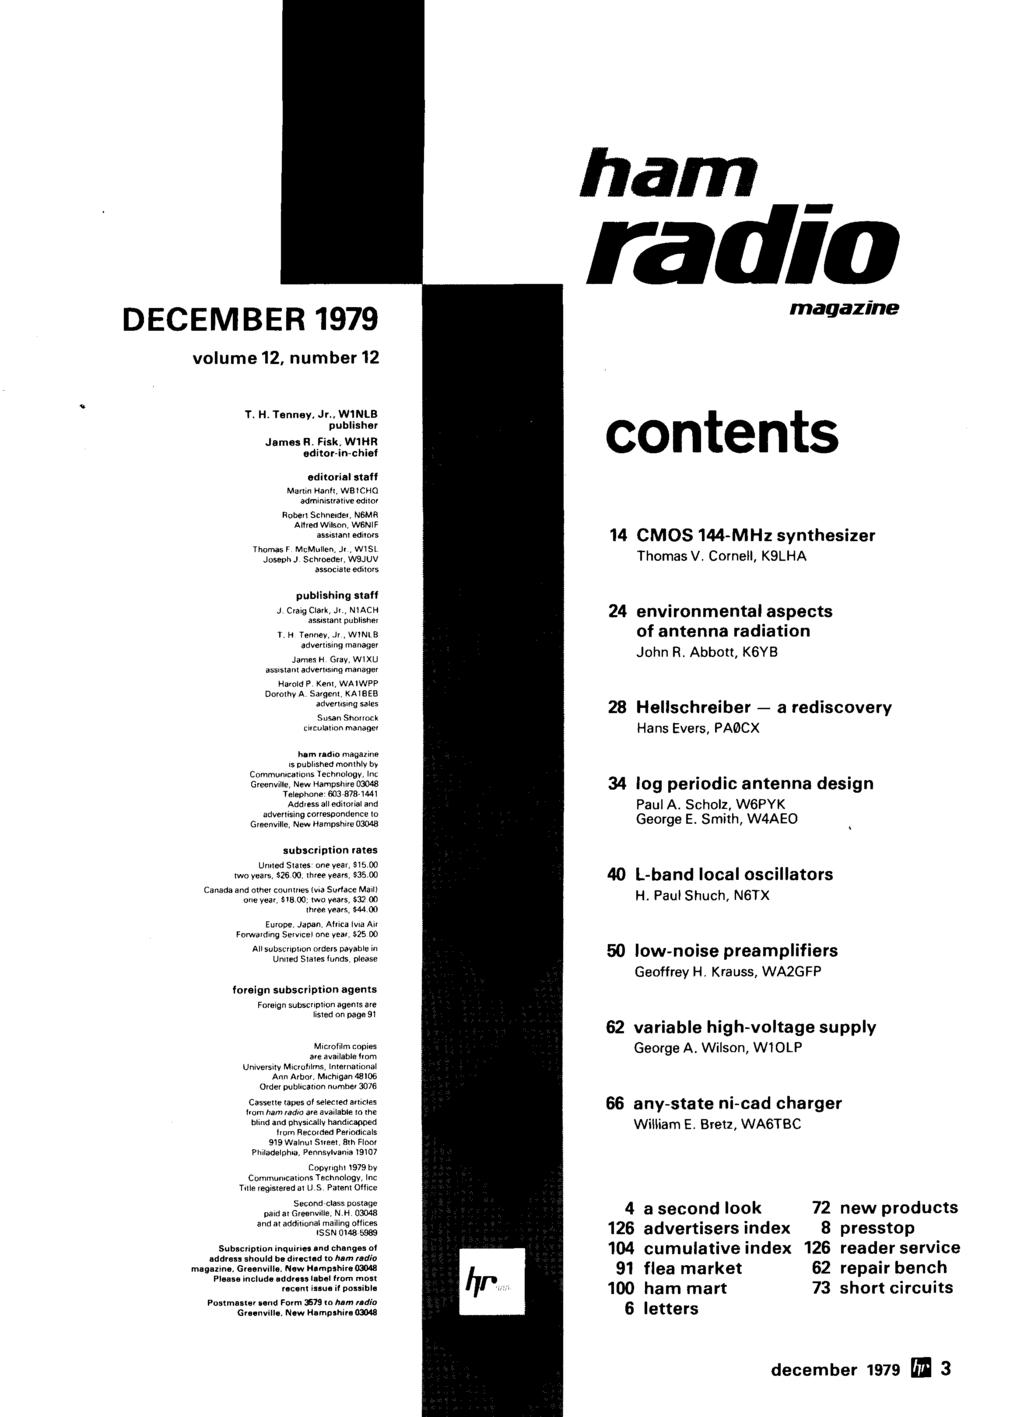 magazine contents 14 CMOS 144-MHz synthesizer Thomas V. Cornell, K9LHA 24 environmental aspects of antenna radiation John R.